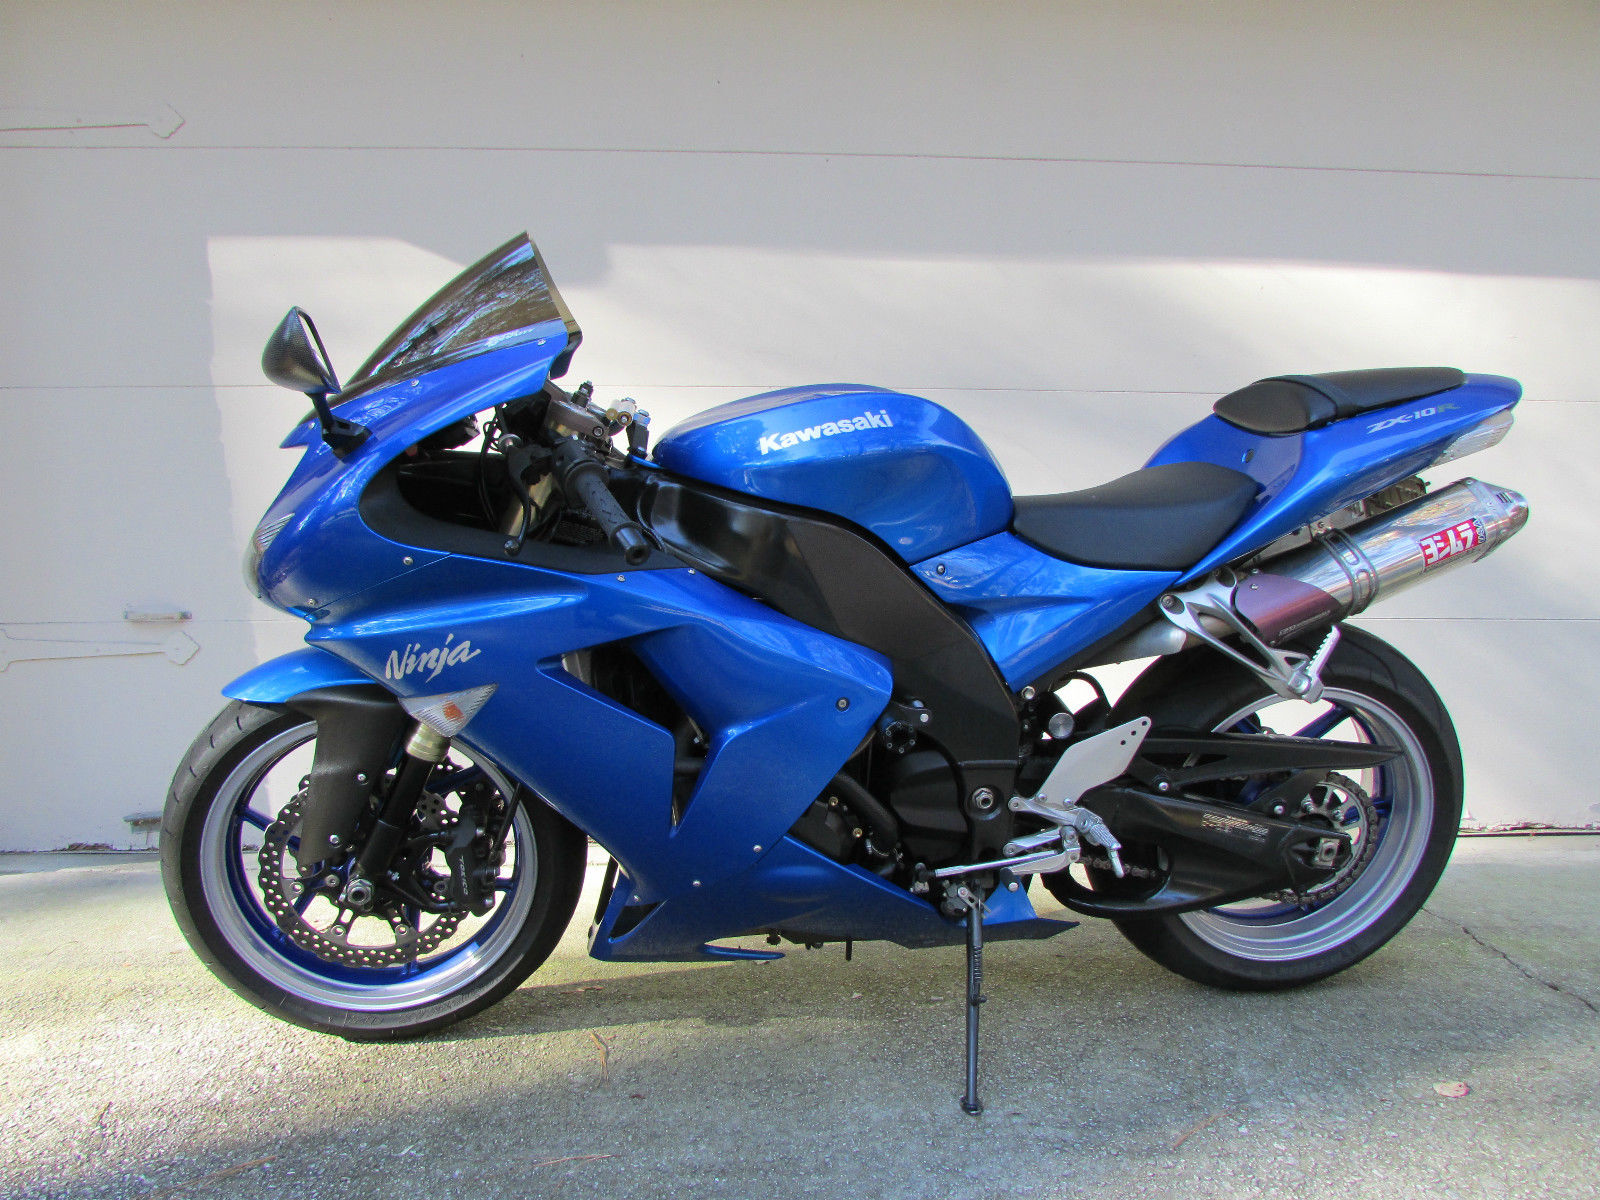 Kawasaki ZX10R Blue 1000 cc